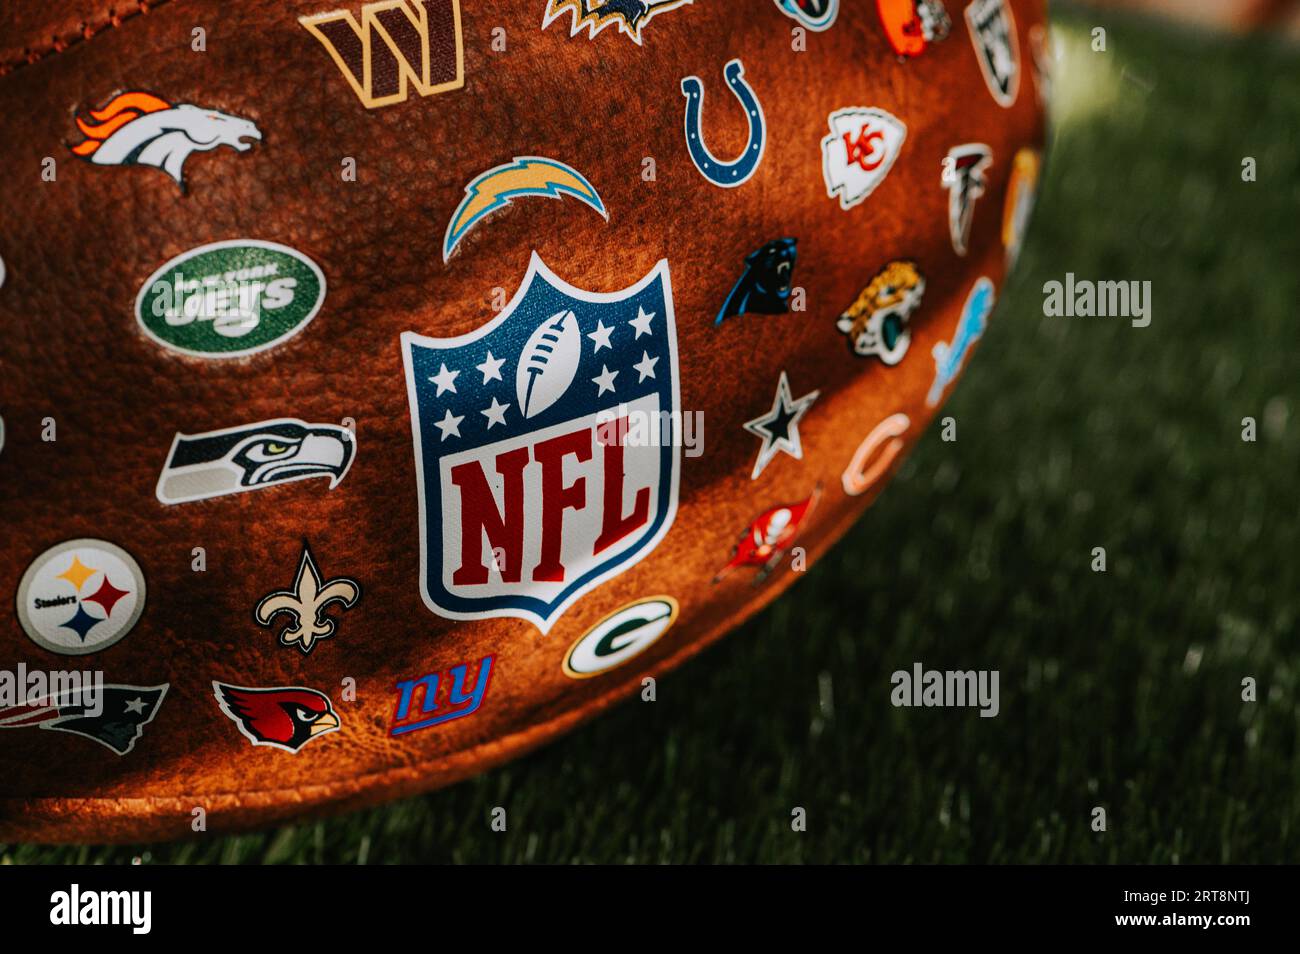 NEW YORK, USA, 11. SEPTEMBER 2023: Detailansicht des NFL Leather Ball - Offizieller Ball der National Football League mit Logos der Teams, die darauf platziert sind Stockfoto